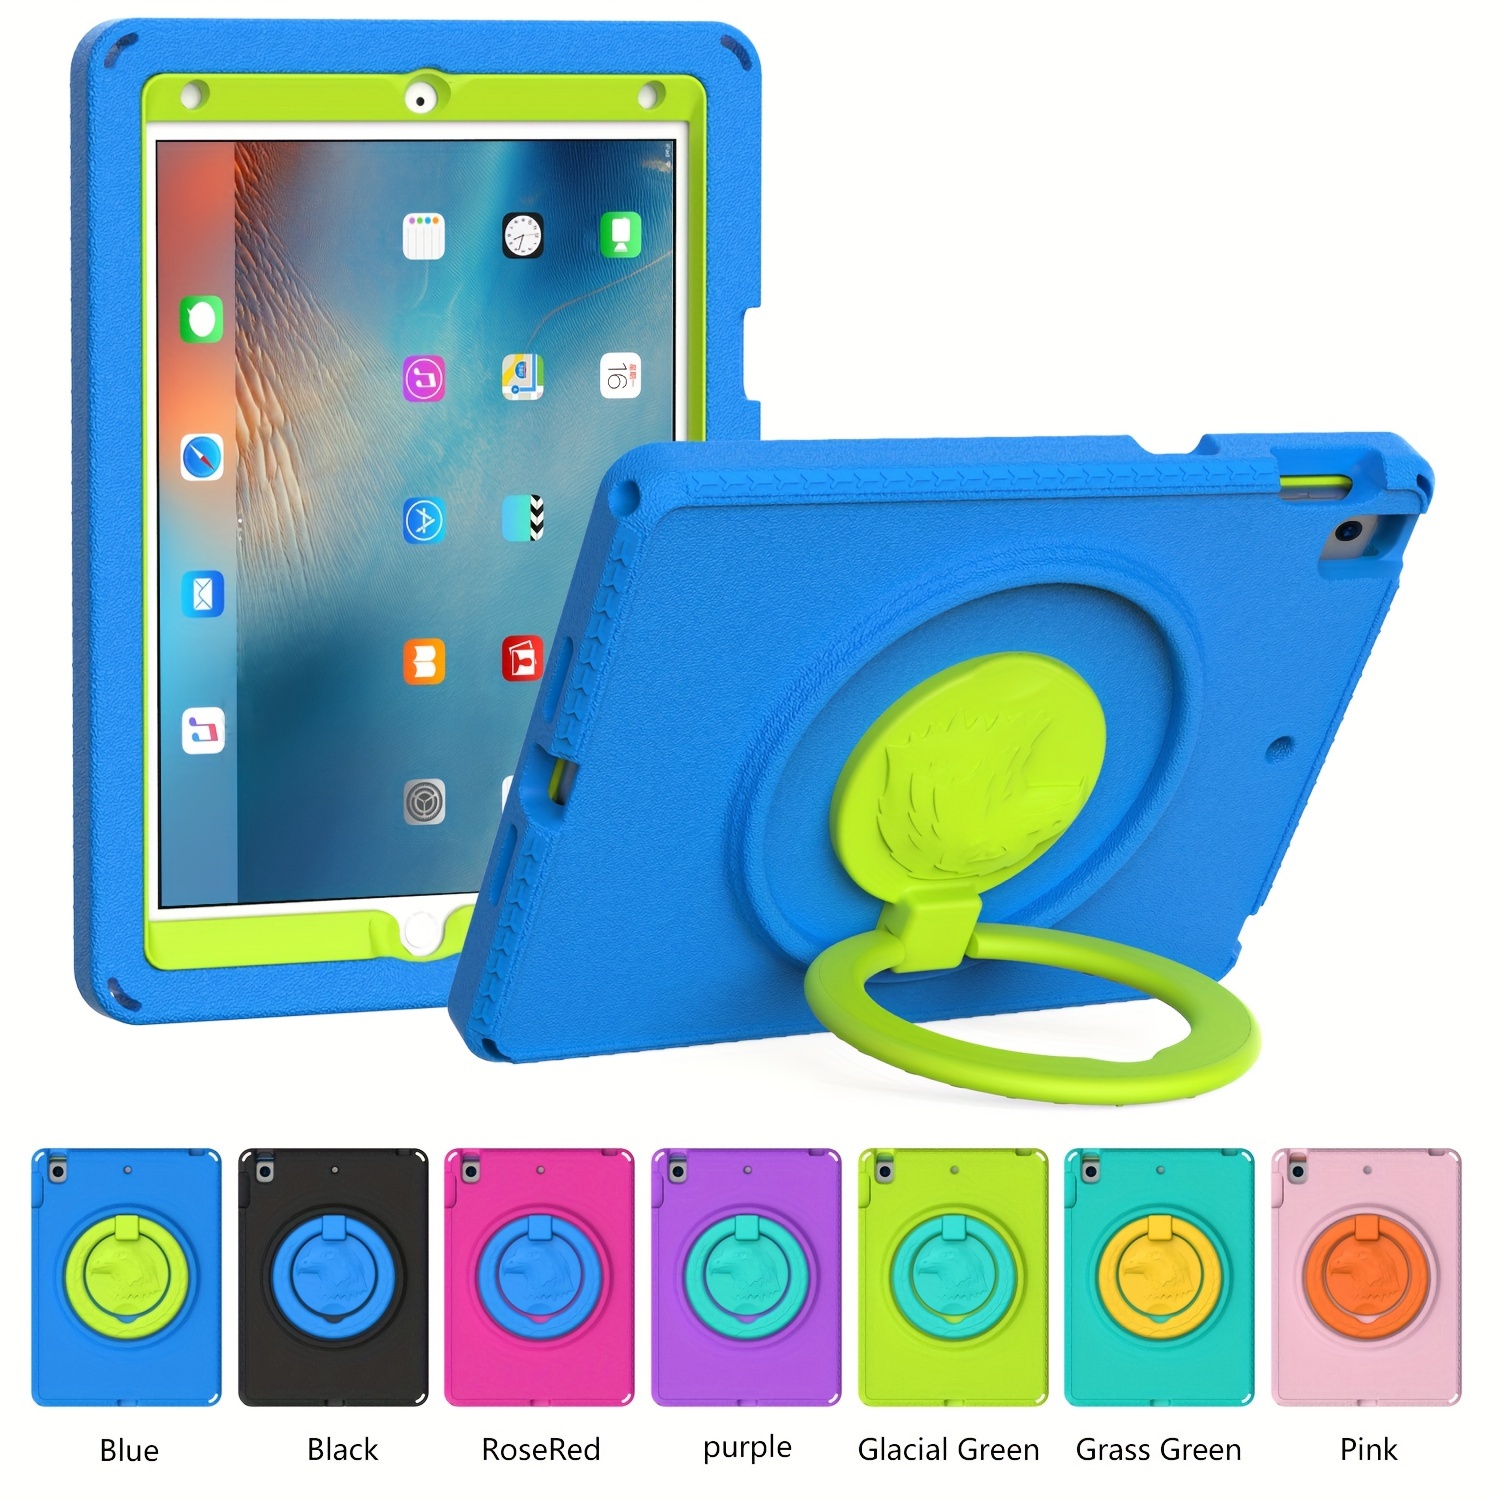 Coque iPad avec bordures couleur unie